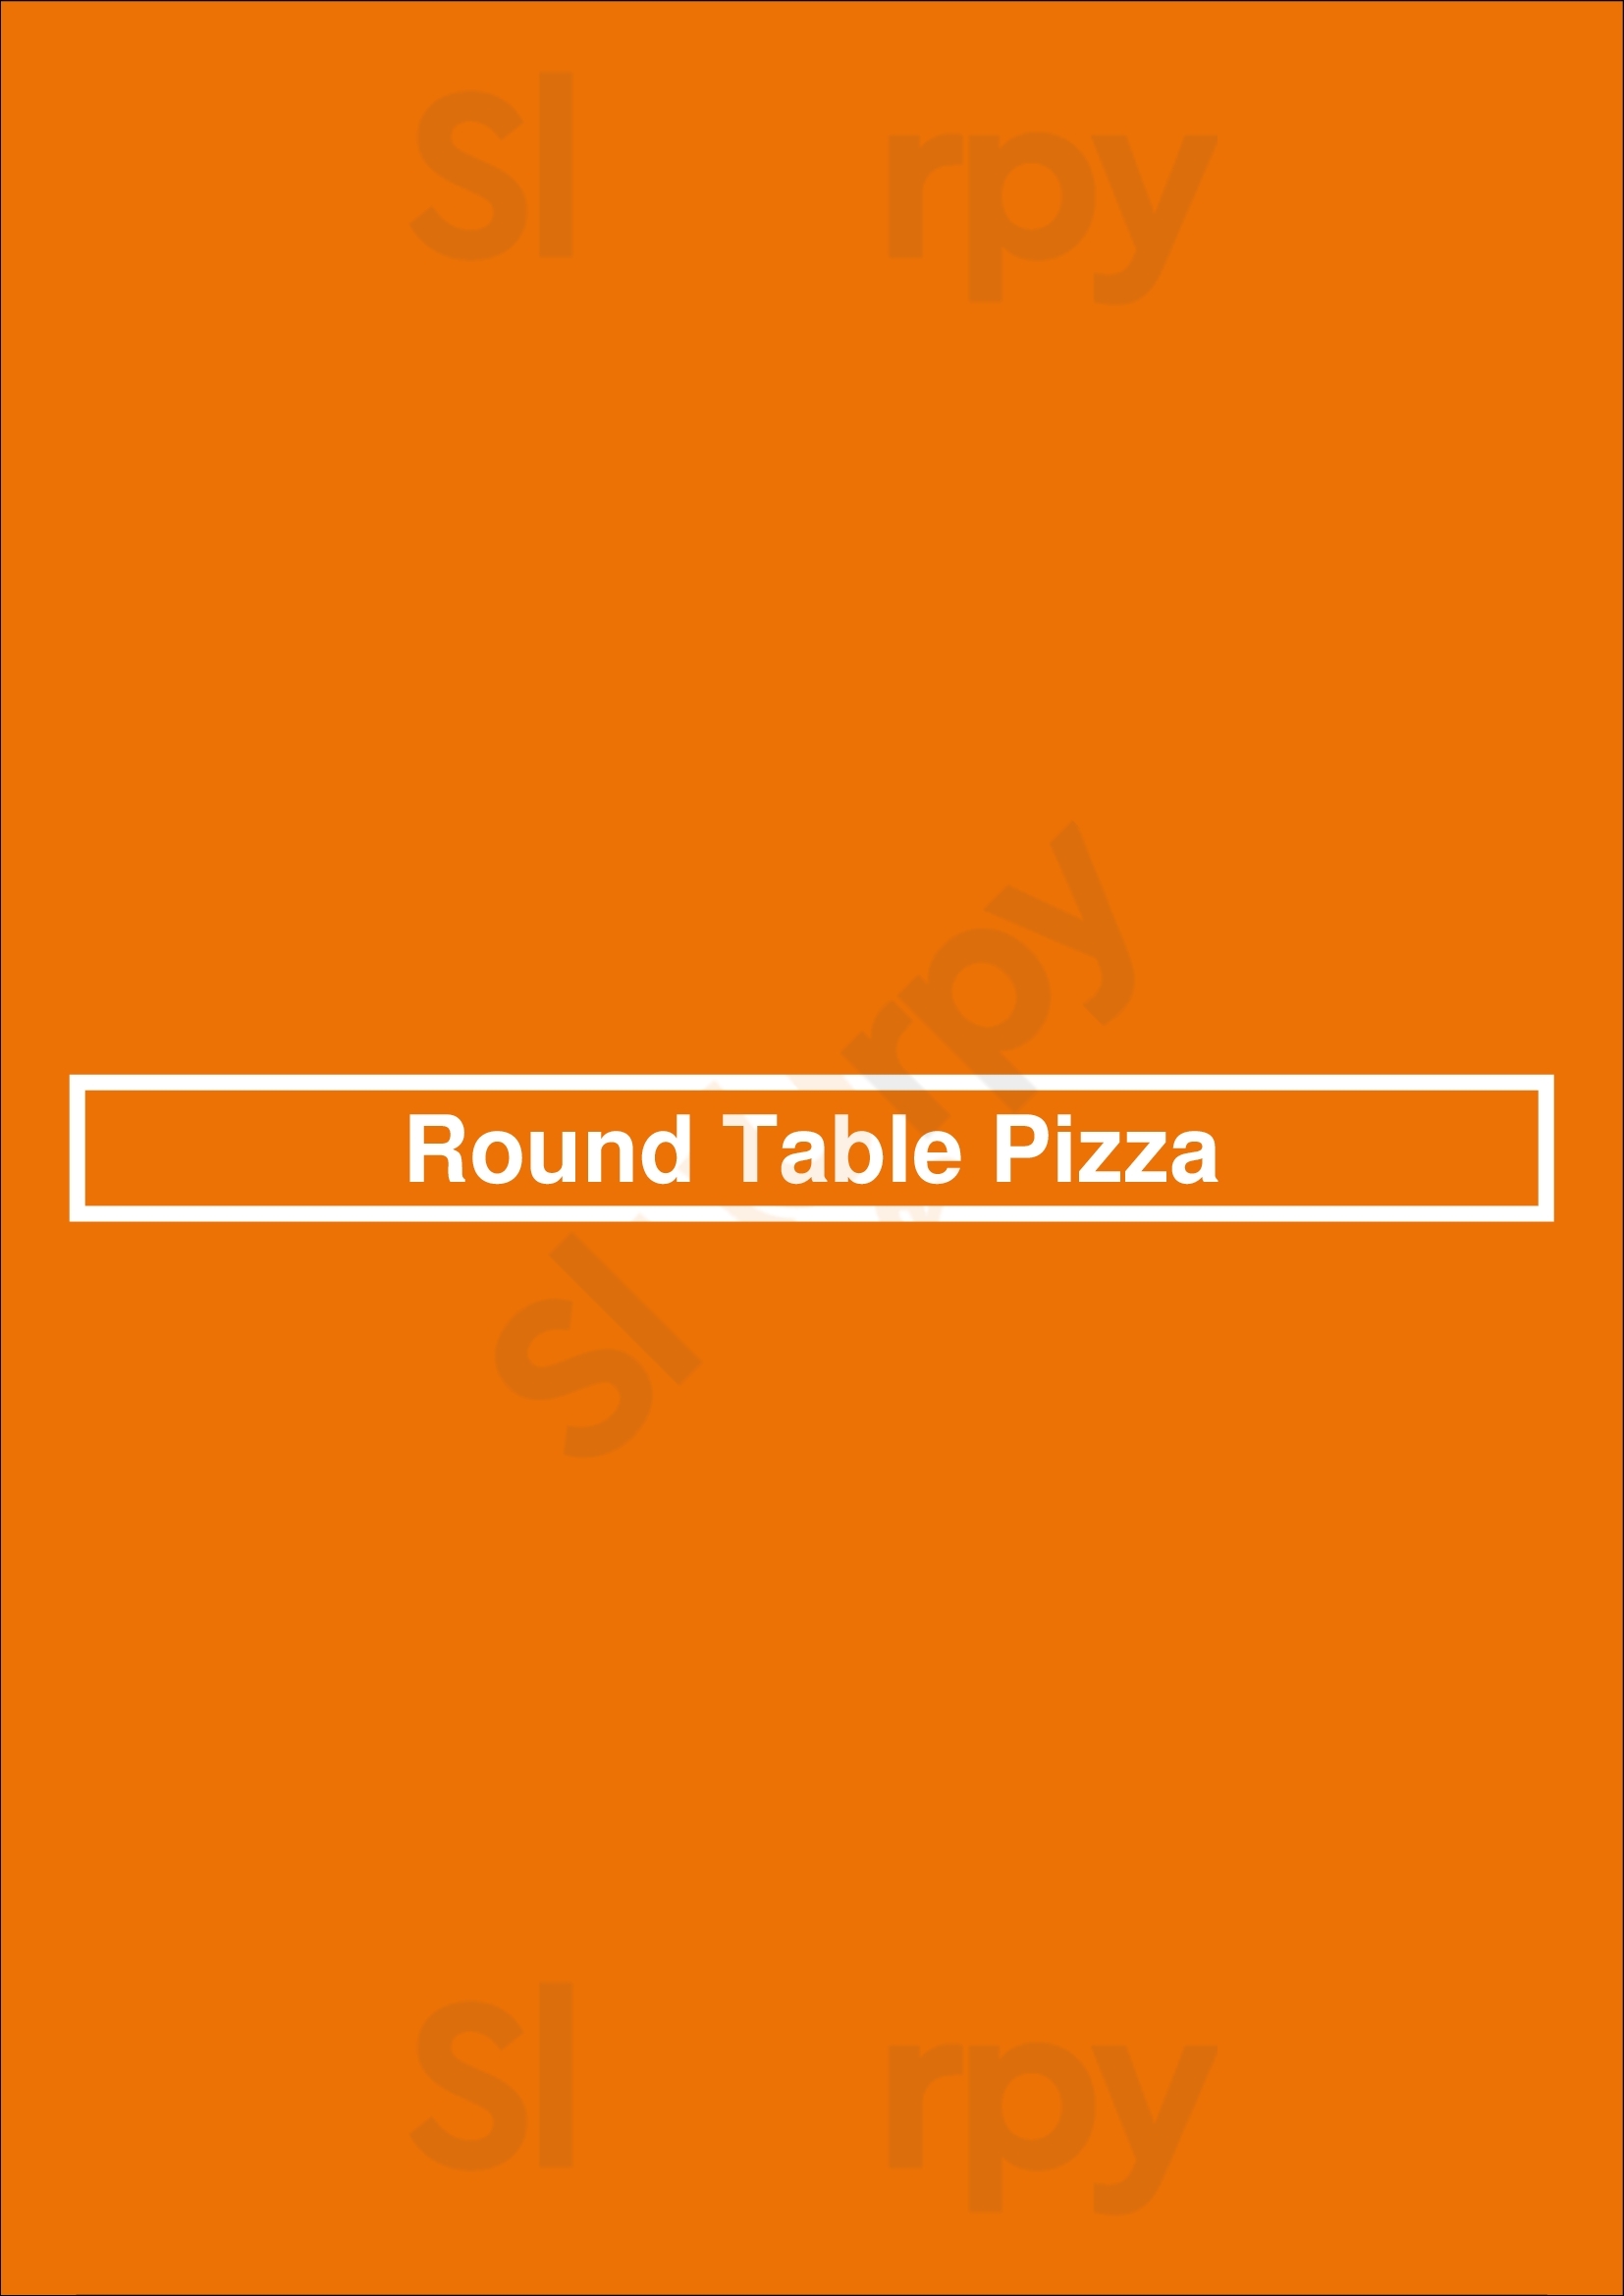 Round Table Pizza Sacramento Menu - 1